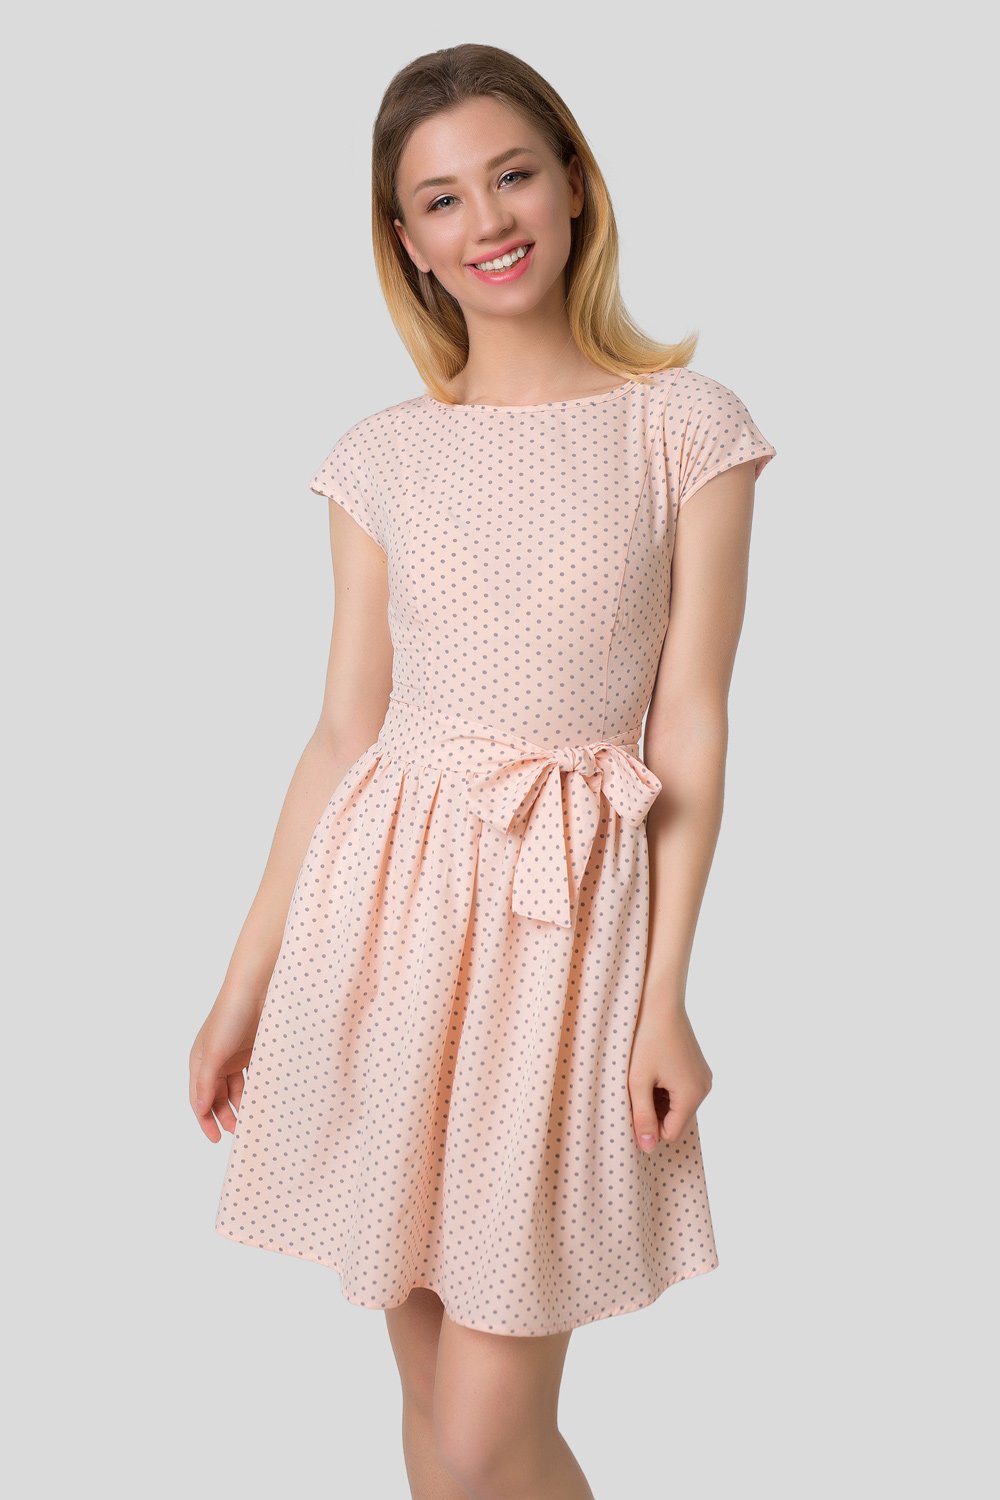 Short polka dot dress